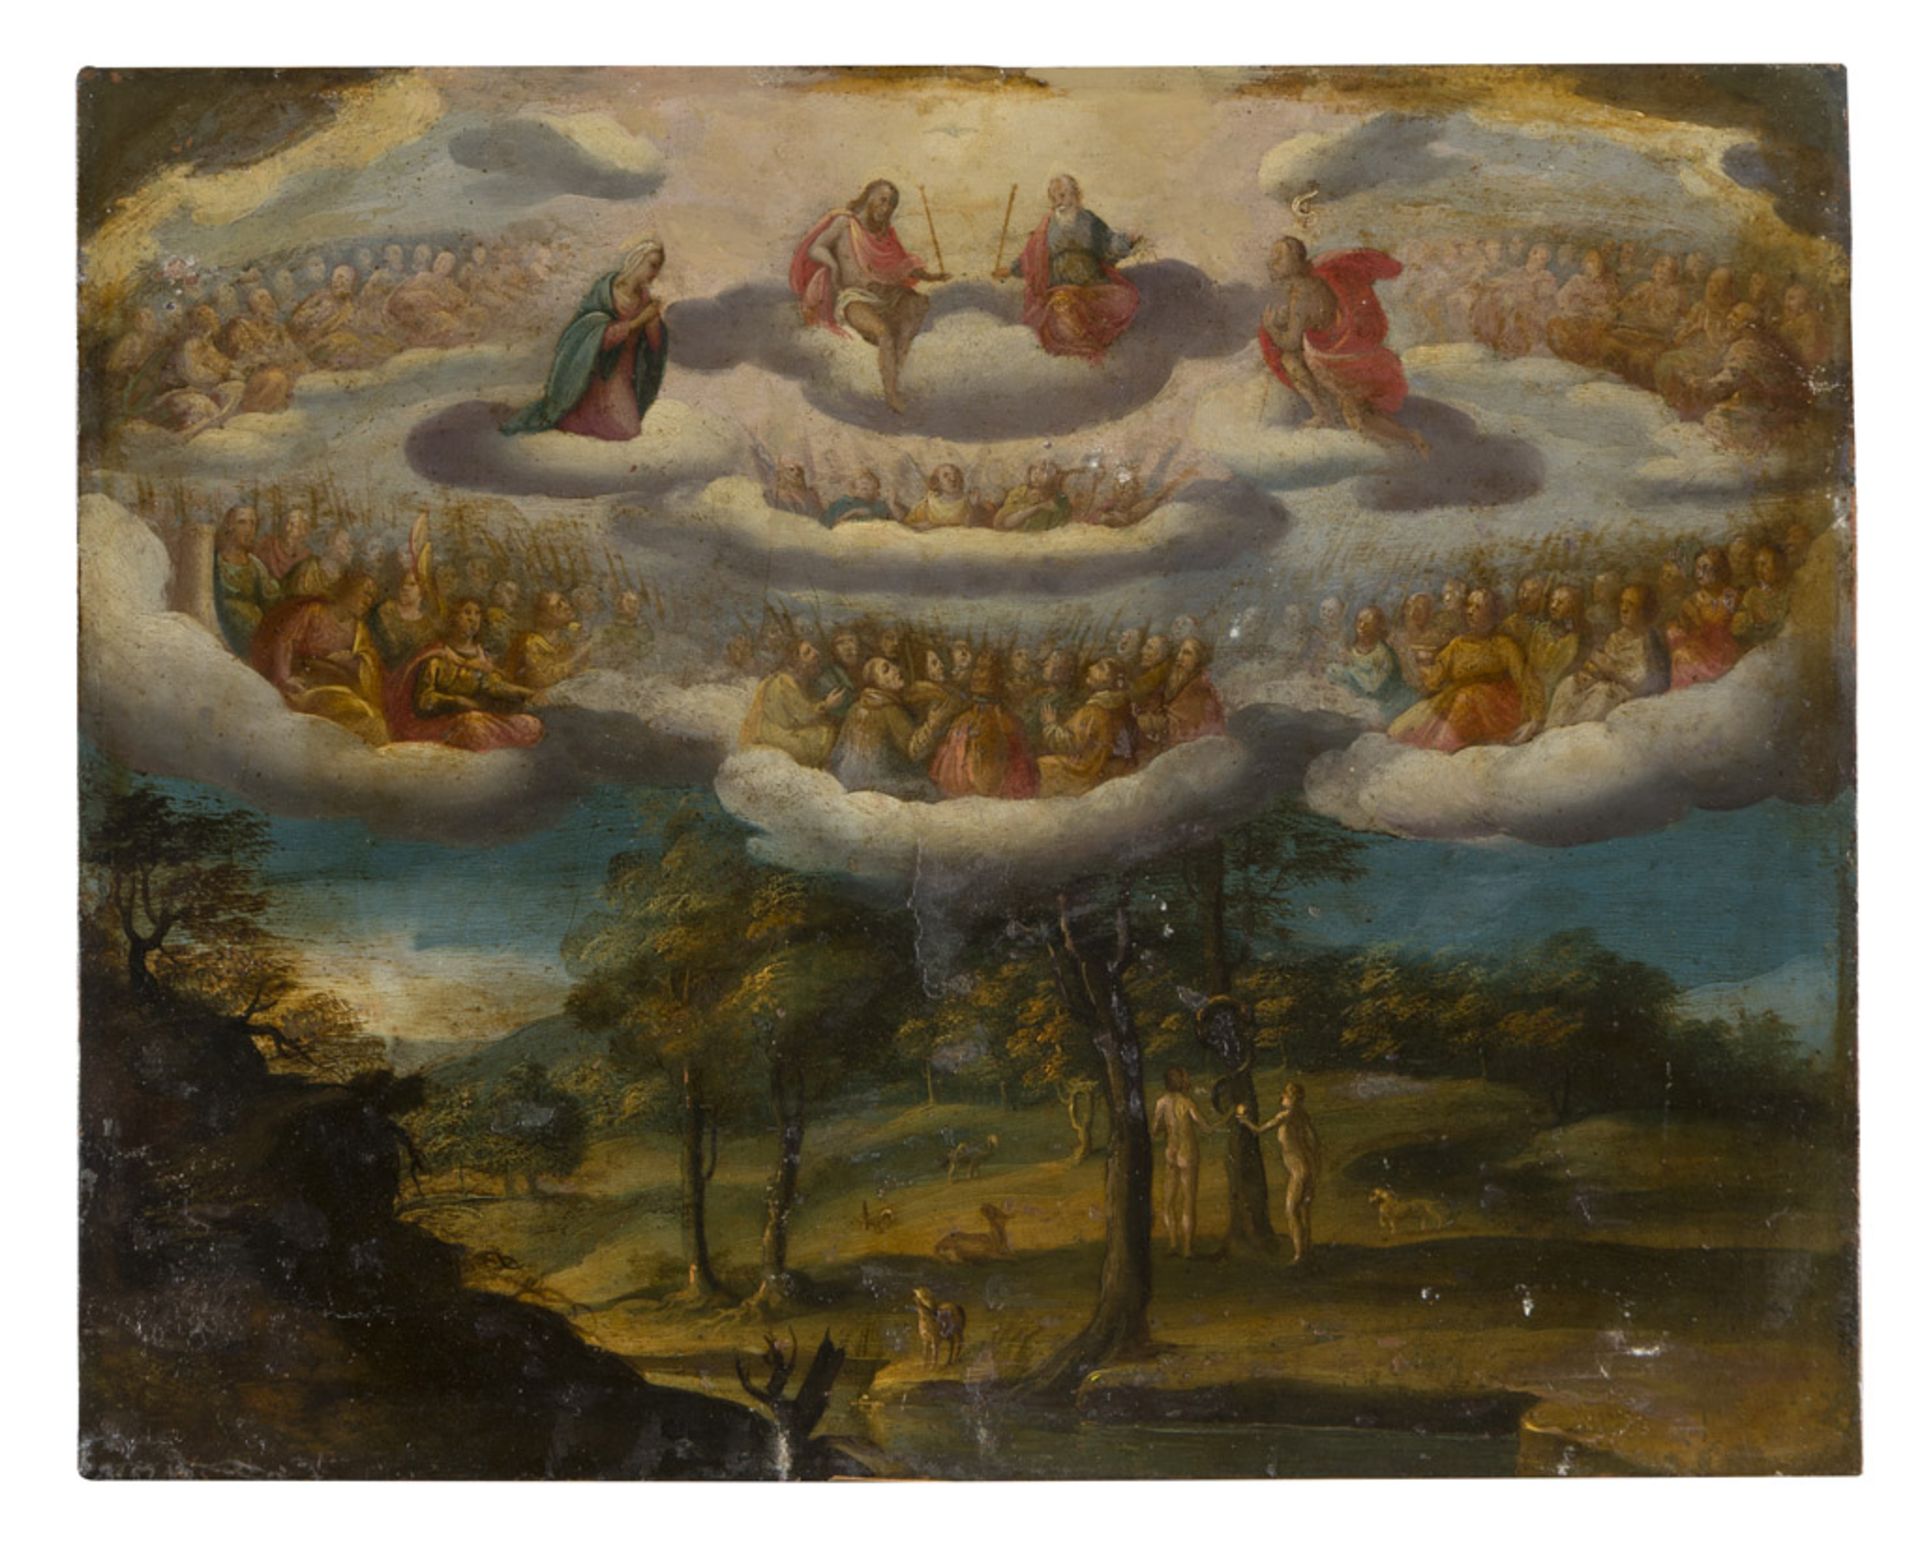 GIOVANNI ANDREA DONDUCCI called MASTELLETTA, workshop of (Bologna 1575 - 1655) CELESTIAL AND